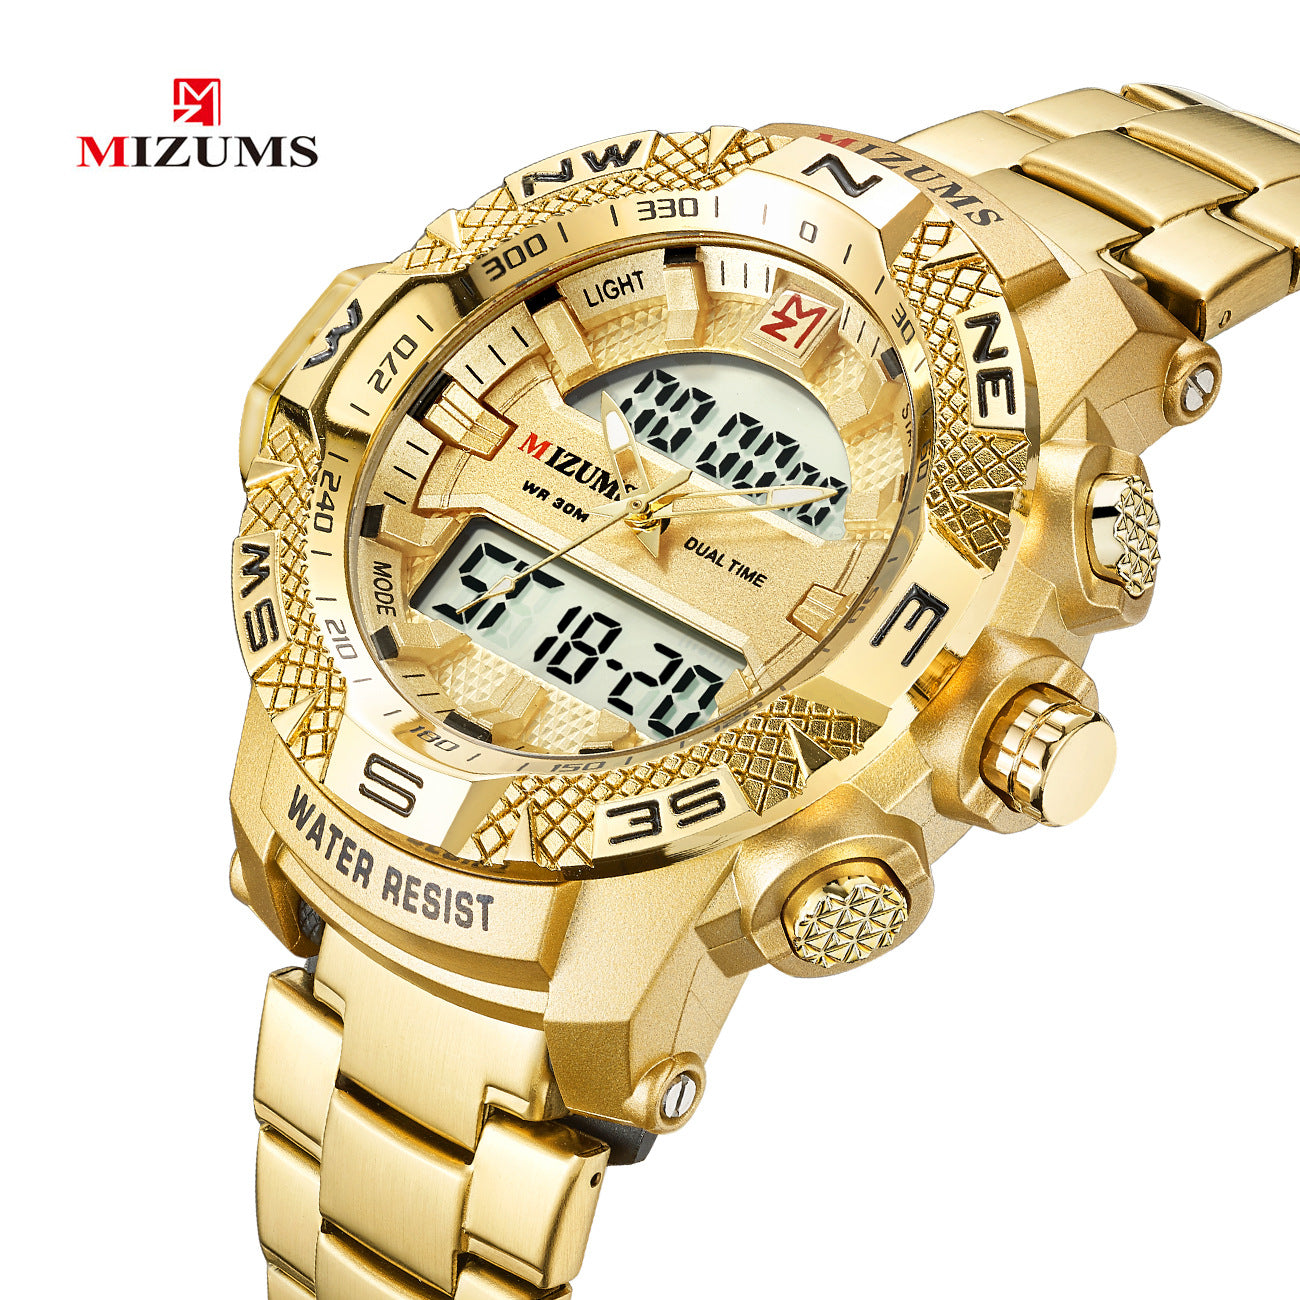 Mizums8024 Men's Watch Sports Men's Watch Double Inserts Electronic Watch Steel Belt Quartz Watch